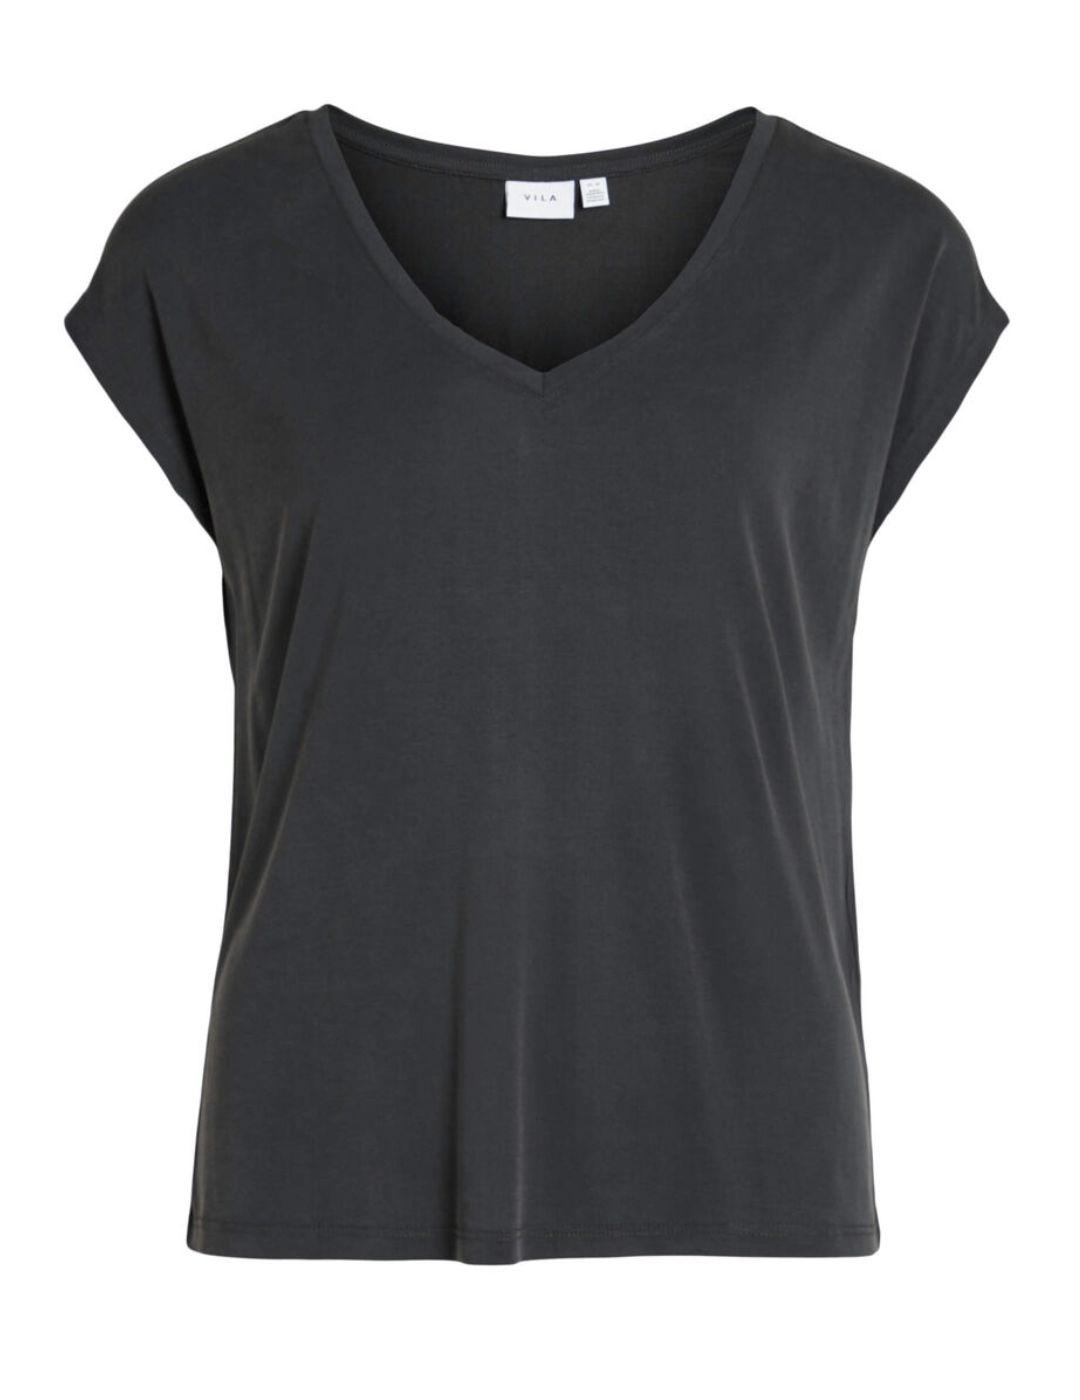 Camiseta Vila Modala negro de pico manga corta para mujer